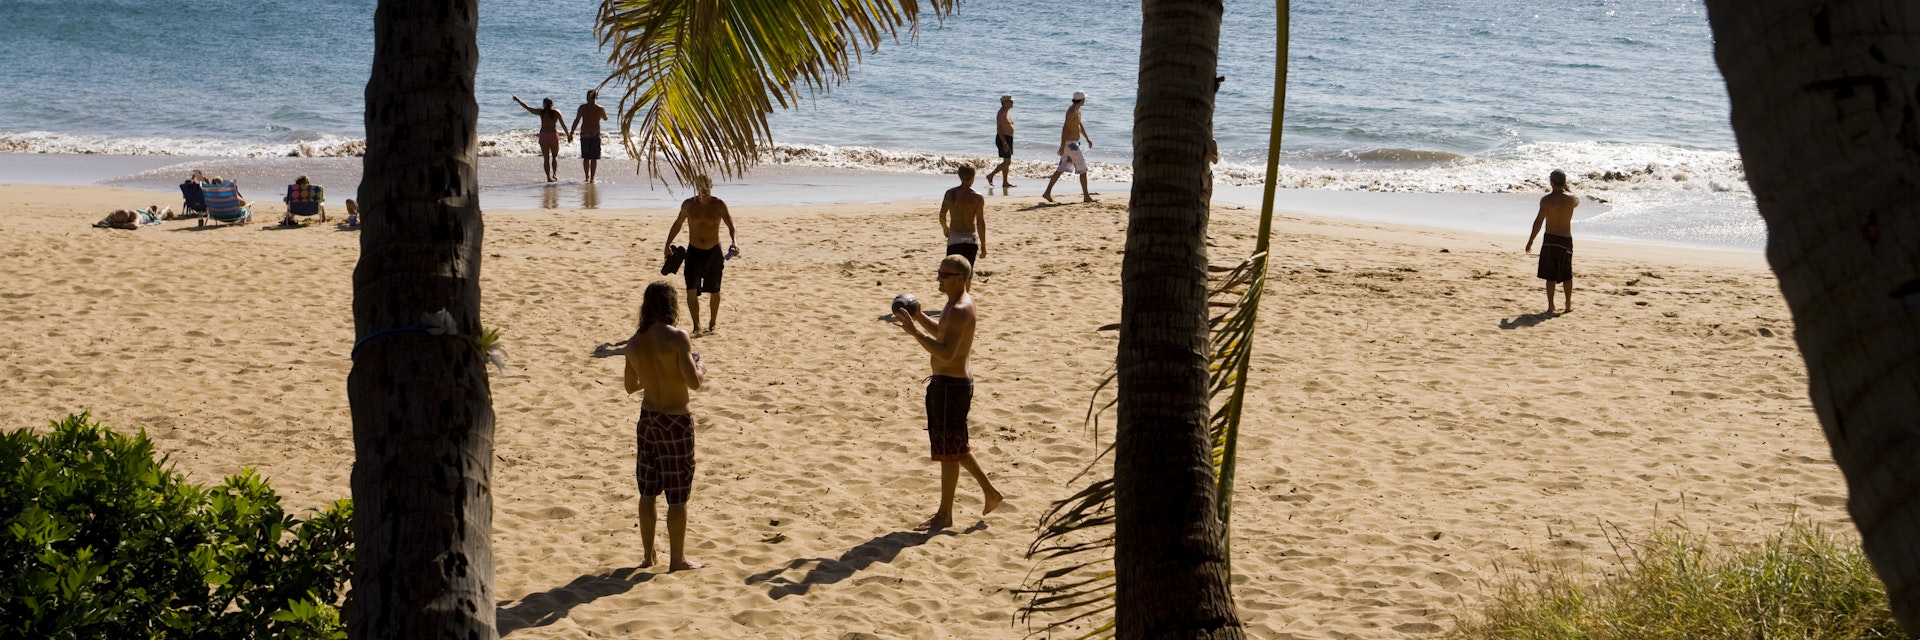 26462-165
Hawaii, Kihei, Maui, North America, United States
Playing catch on Charley Young Beach, Kihei, South West Maui.